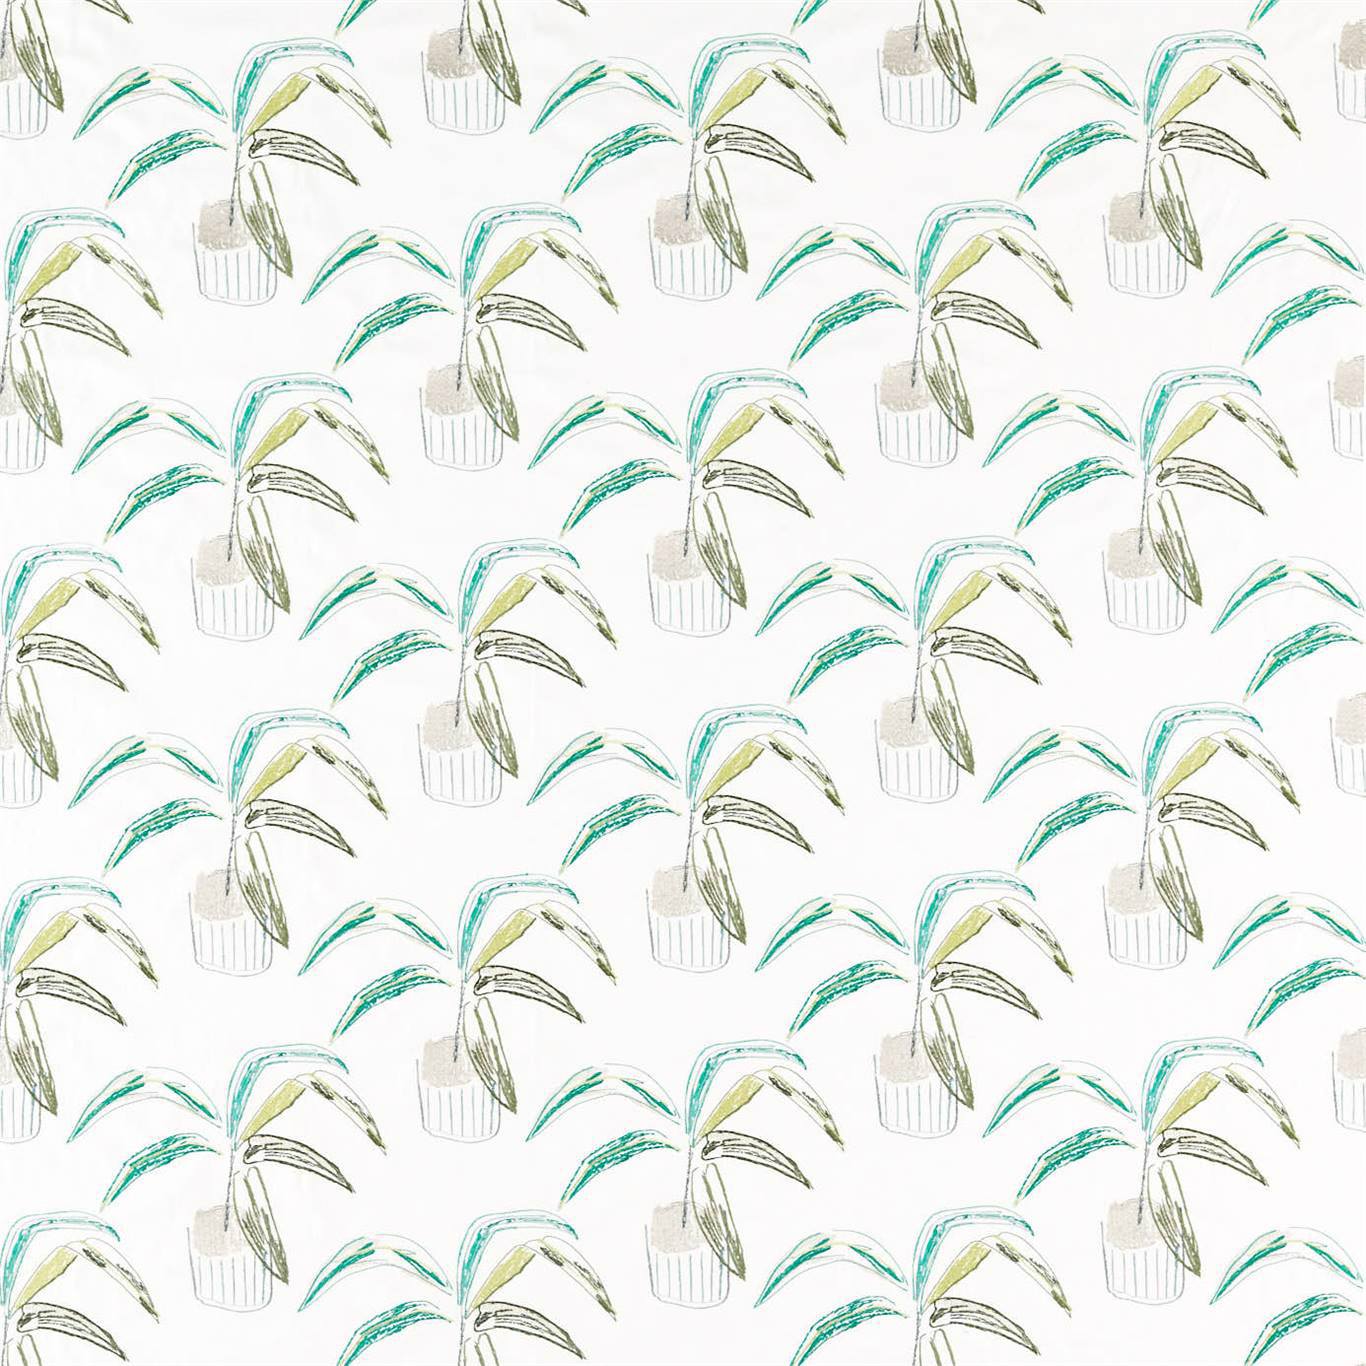 Crassula Fabric by Scion - NABS132860 - Juniper/Lime/Moss